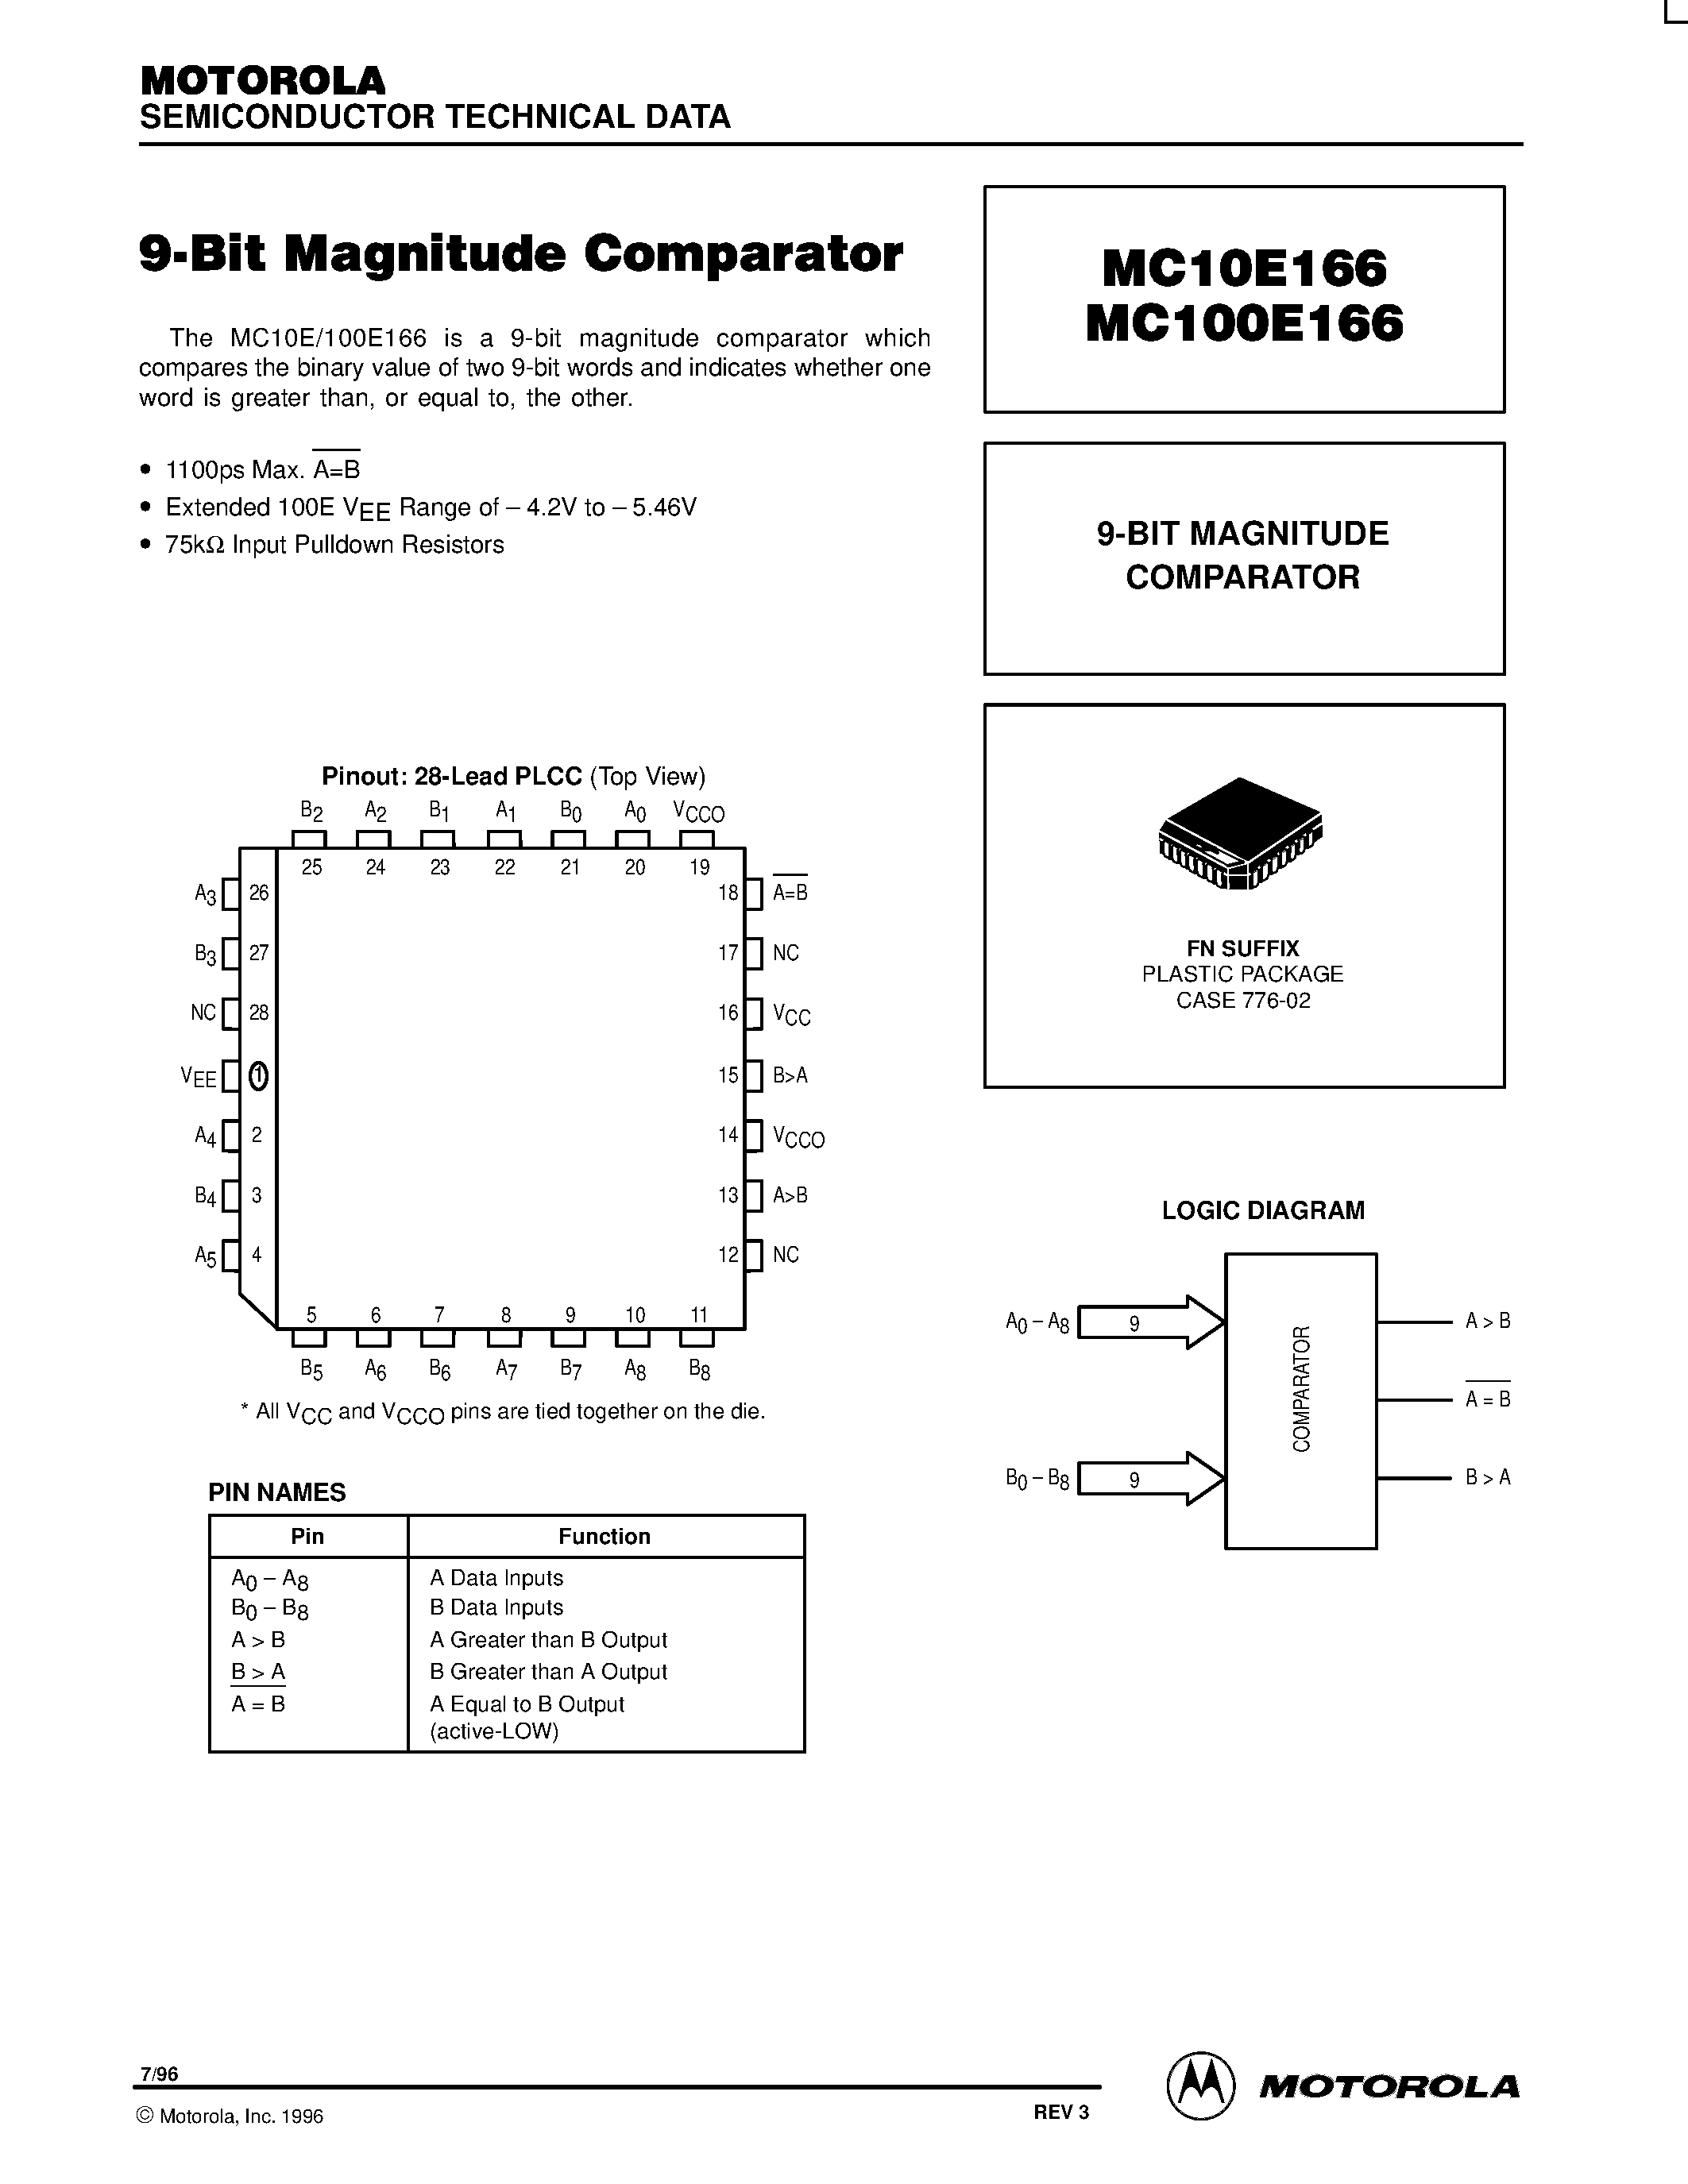 Datasheet MC100E166FN - 9-BIT MAGNITUDE COMPARATOR page 1